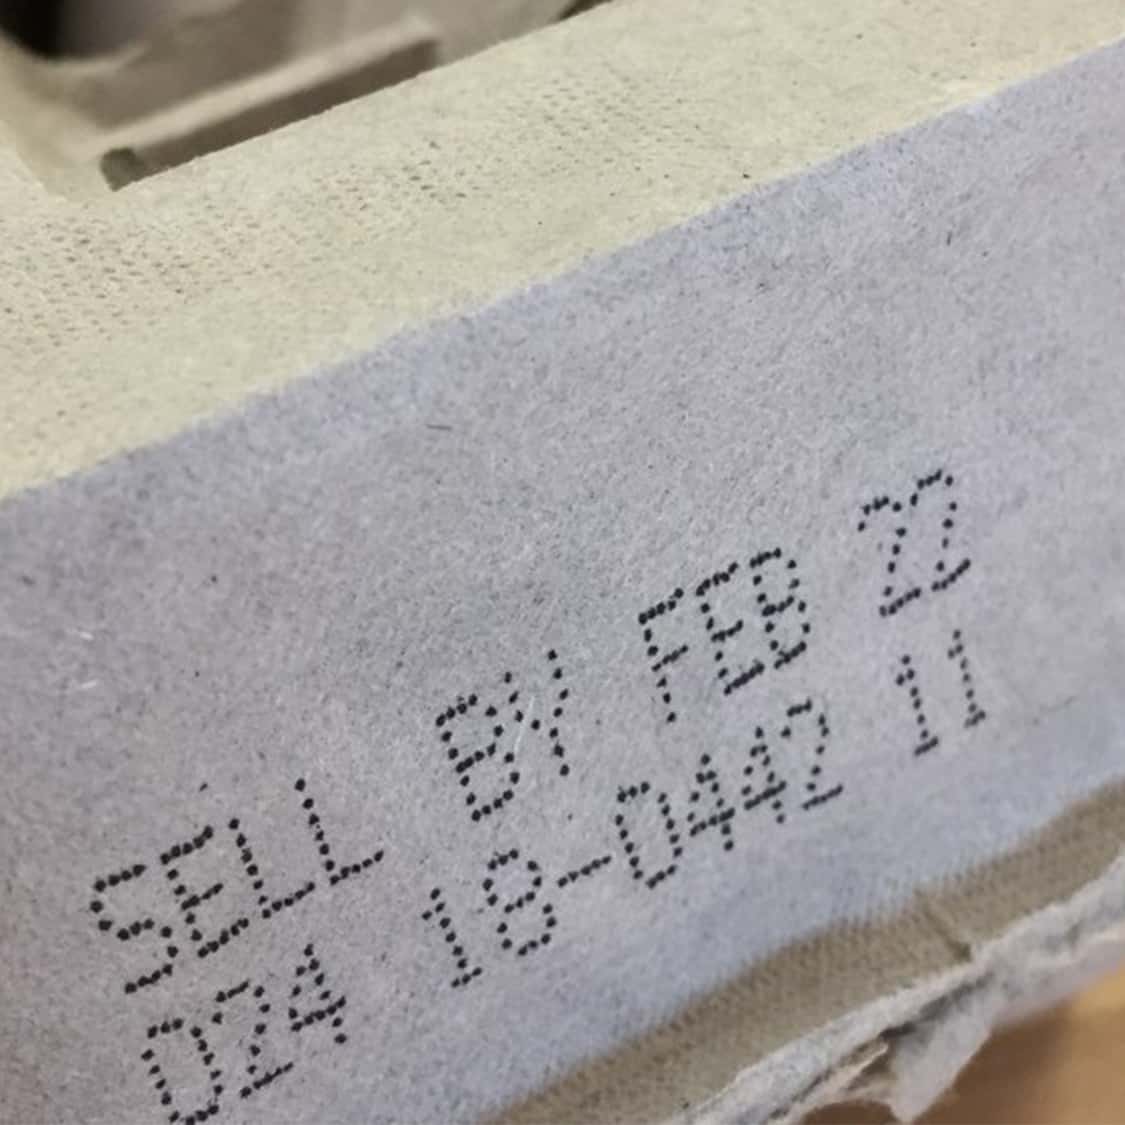 the date on an egg carton